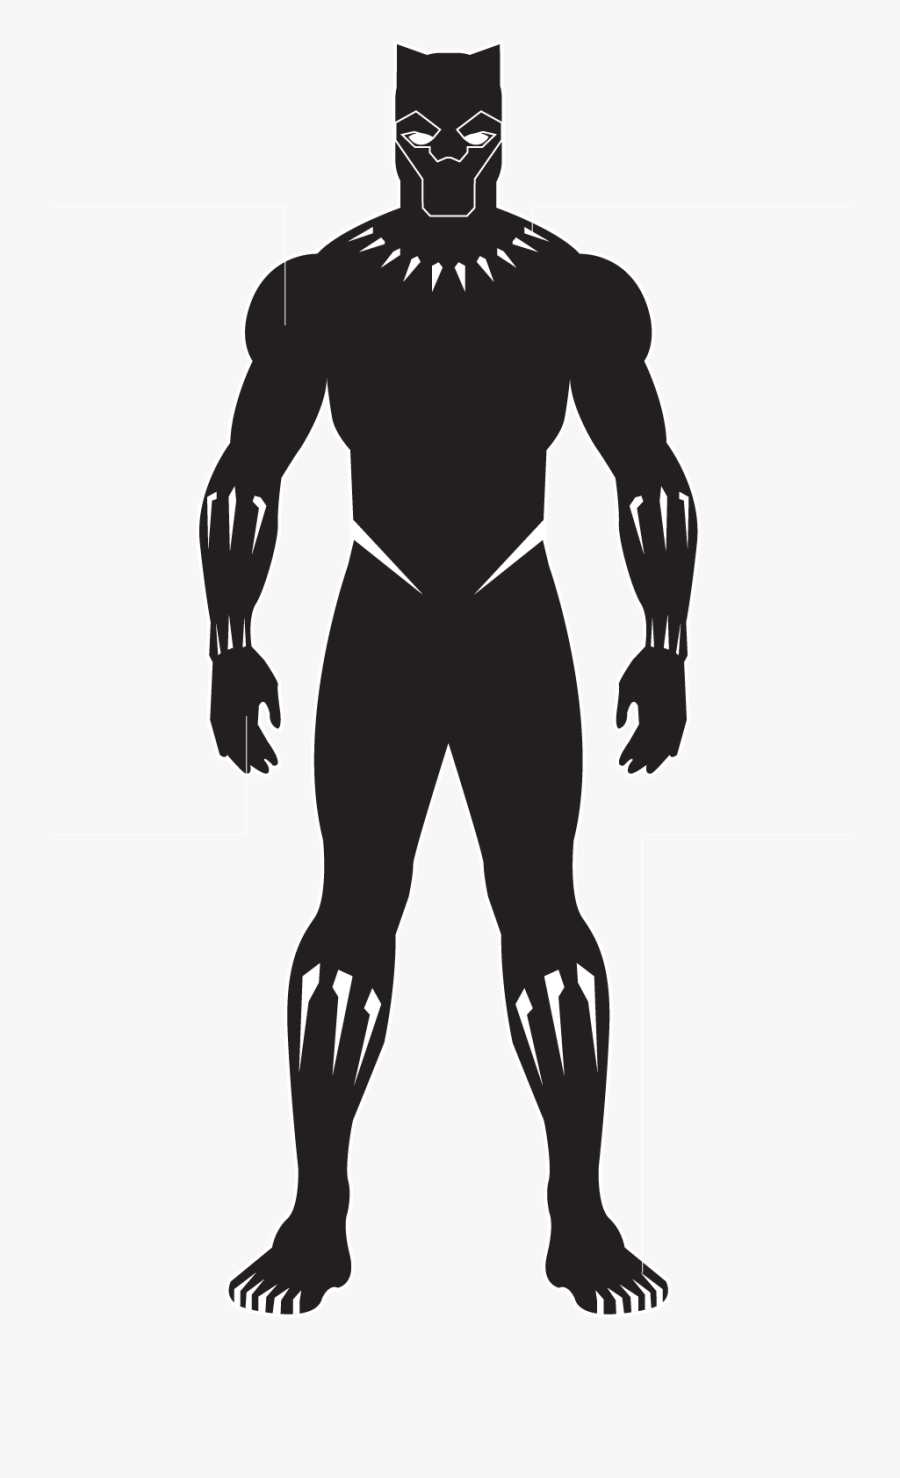 Black Panther Clipart - Black Panther Suit Cartoon, Transparent Clipart